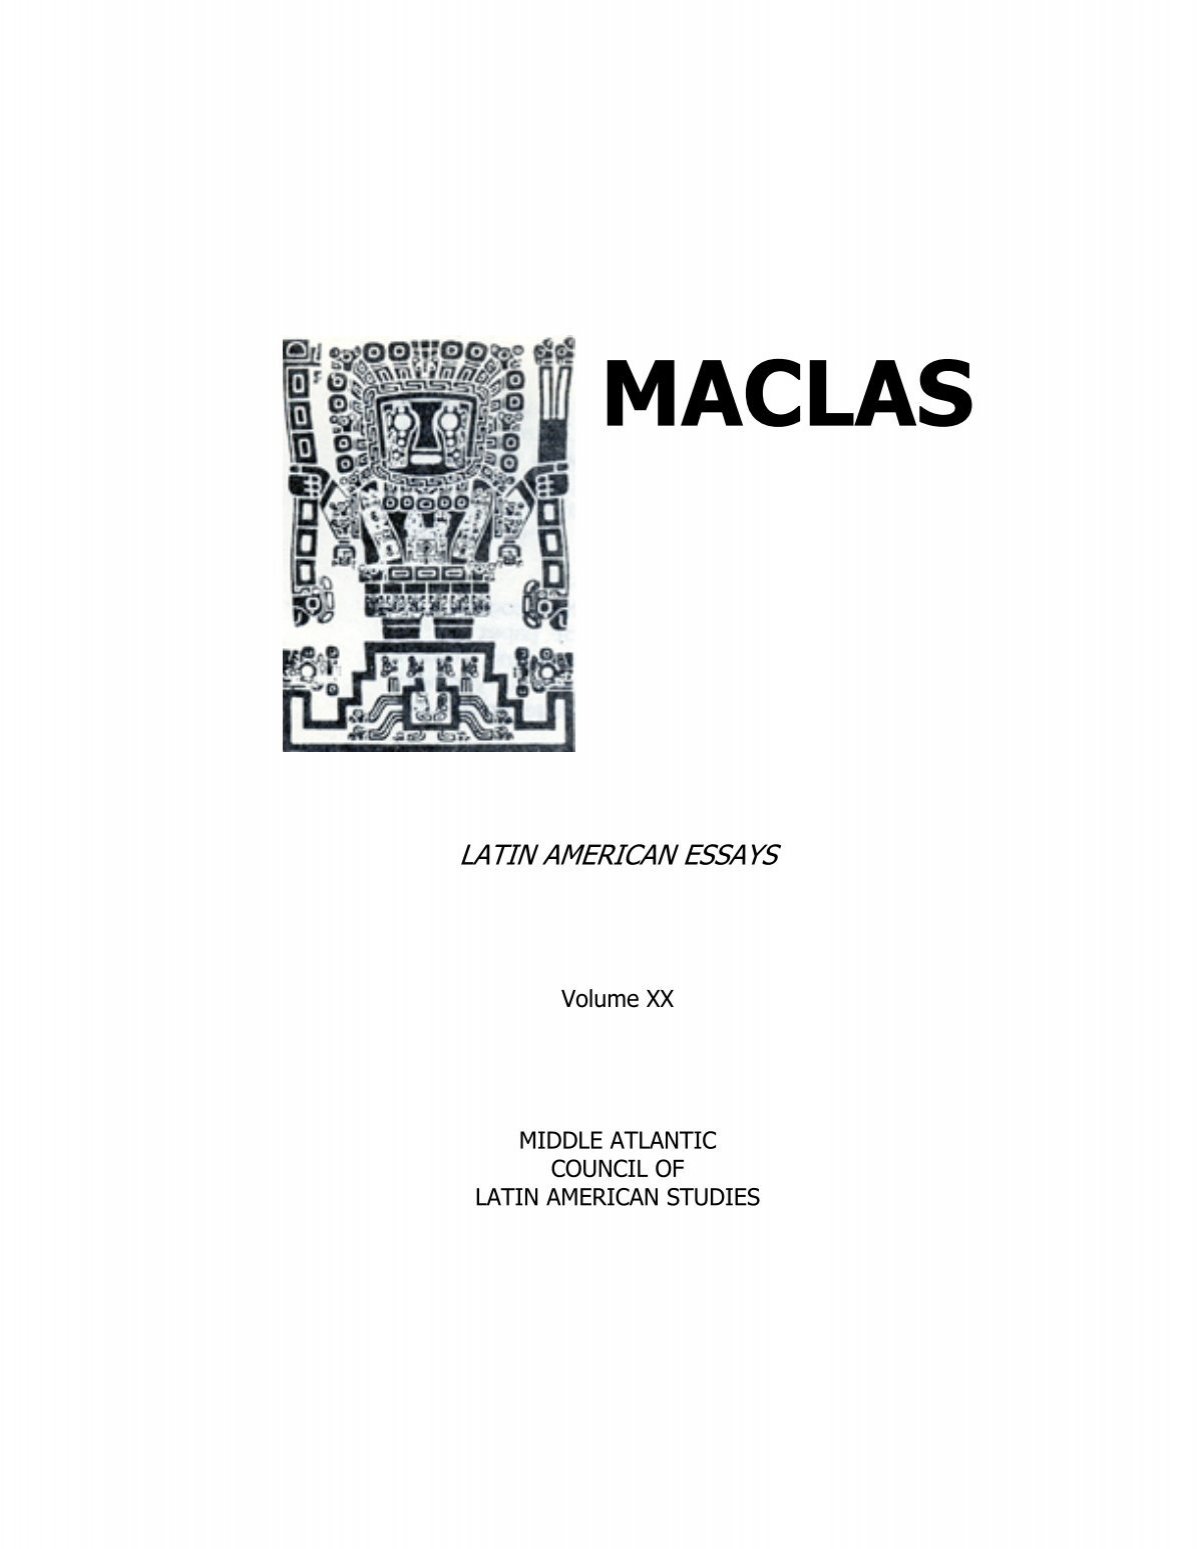 latin american essays maclas